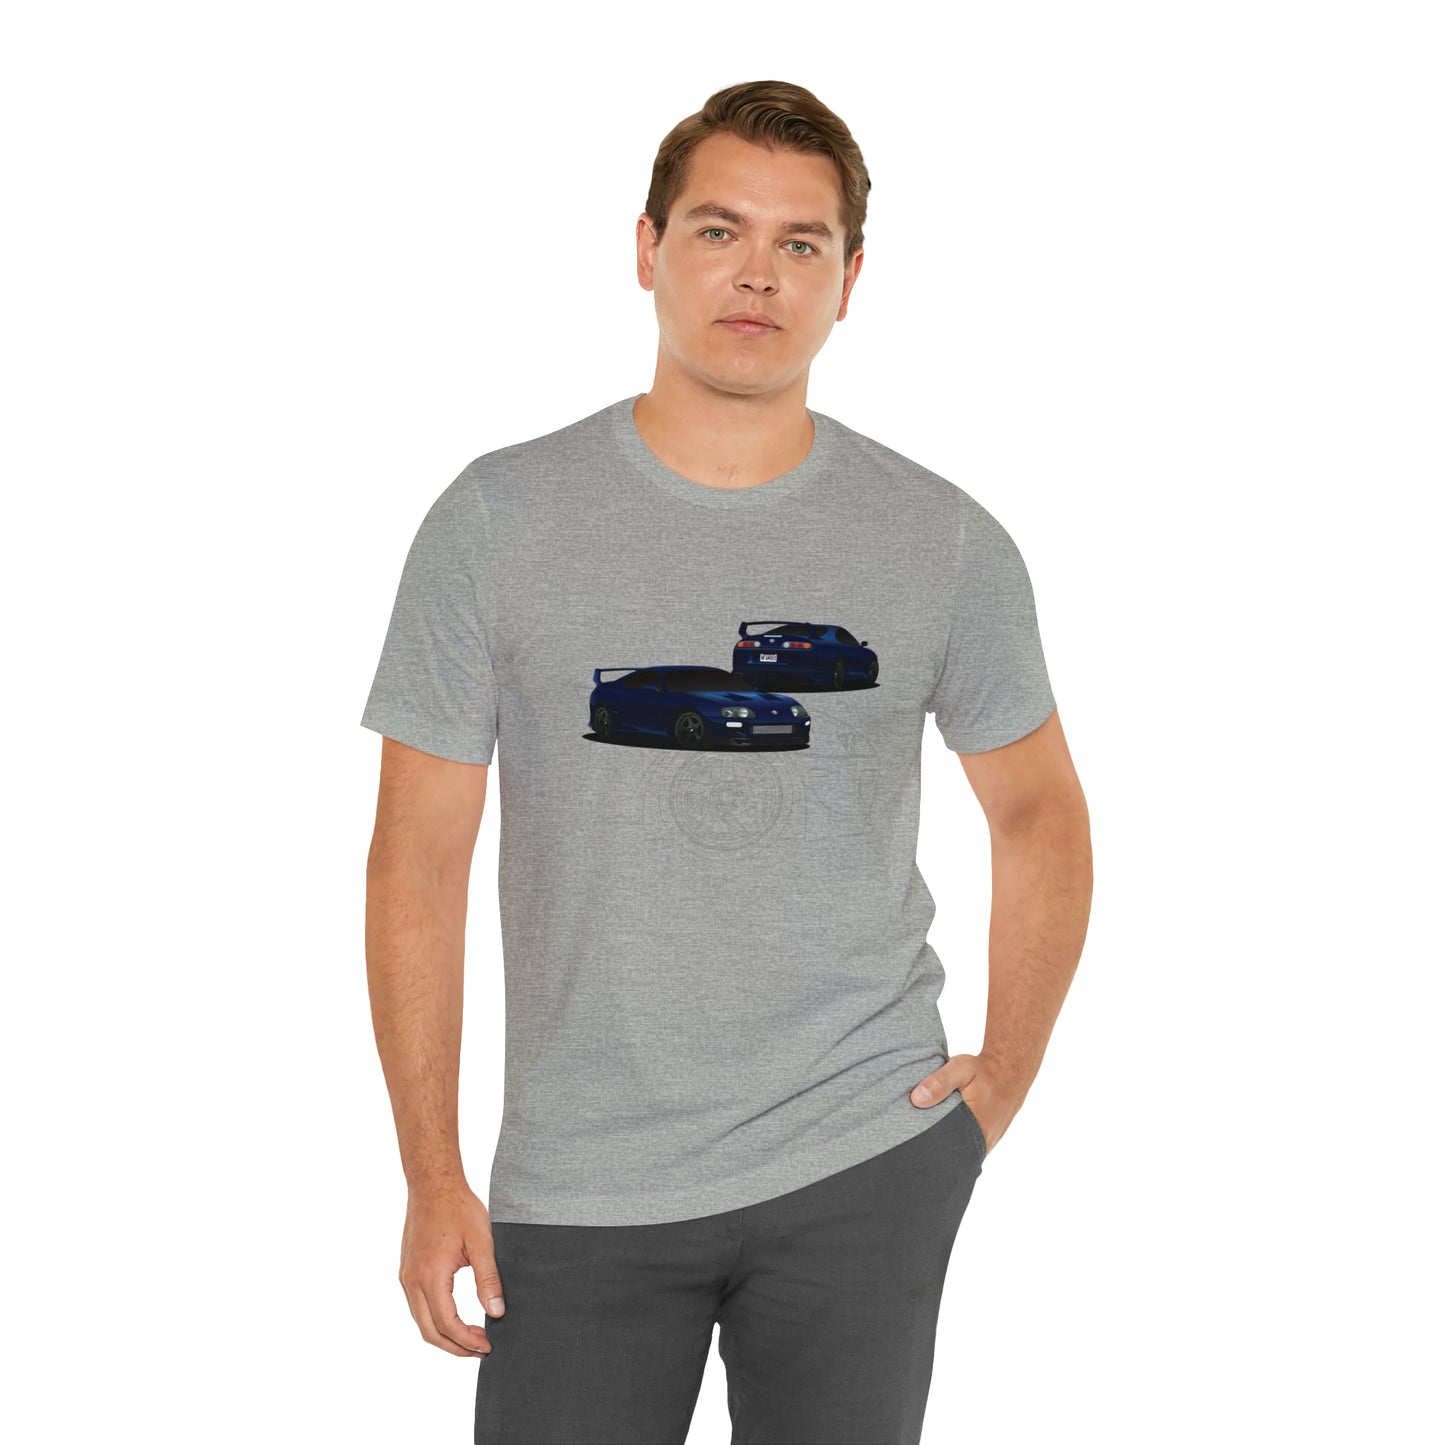 JDM Car Inspired T Shirt 31.